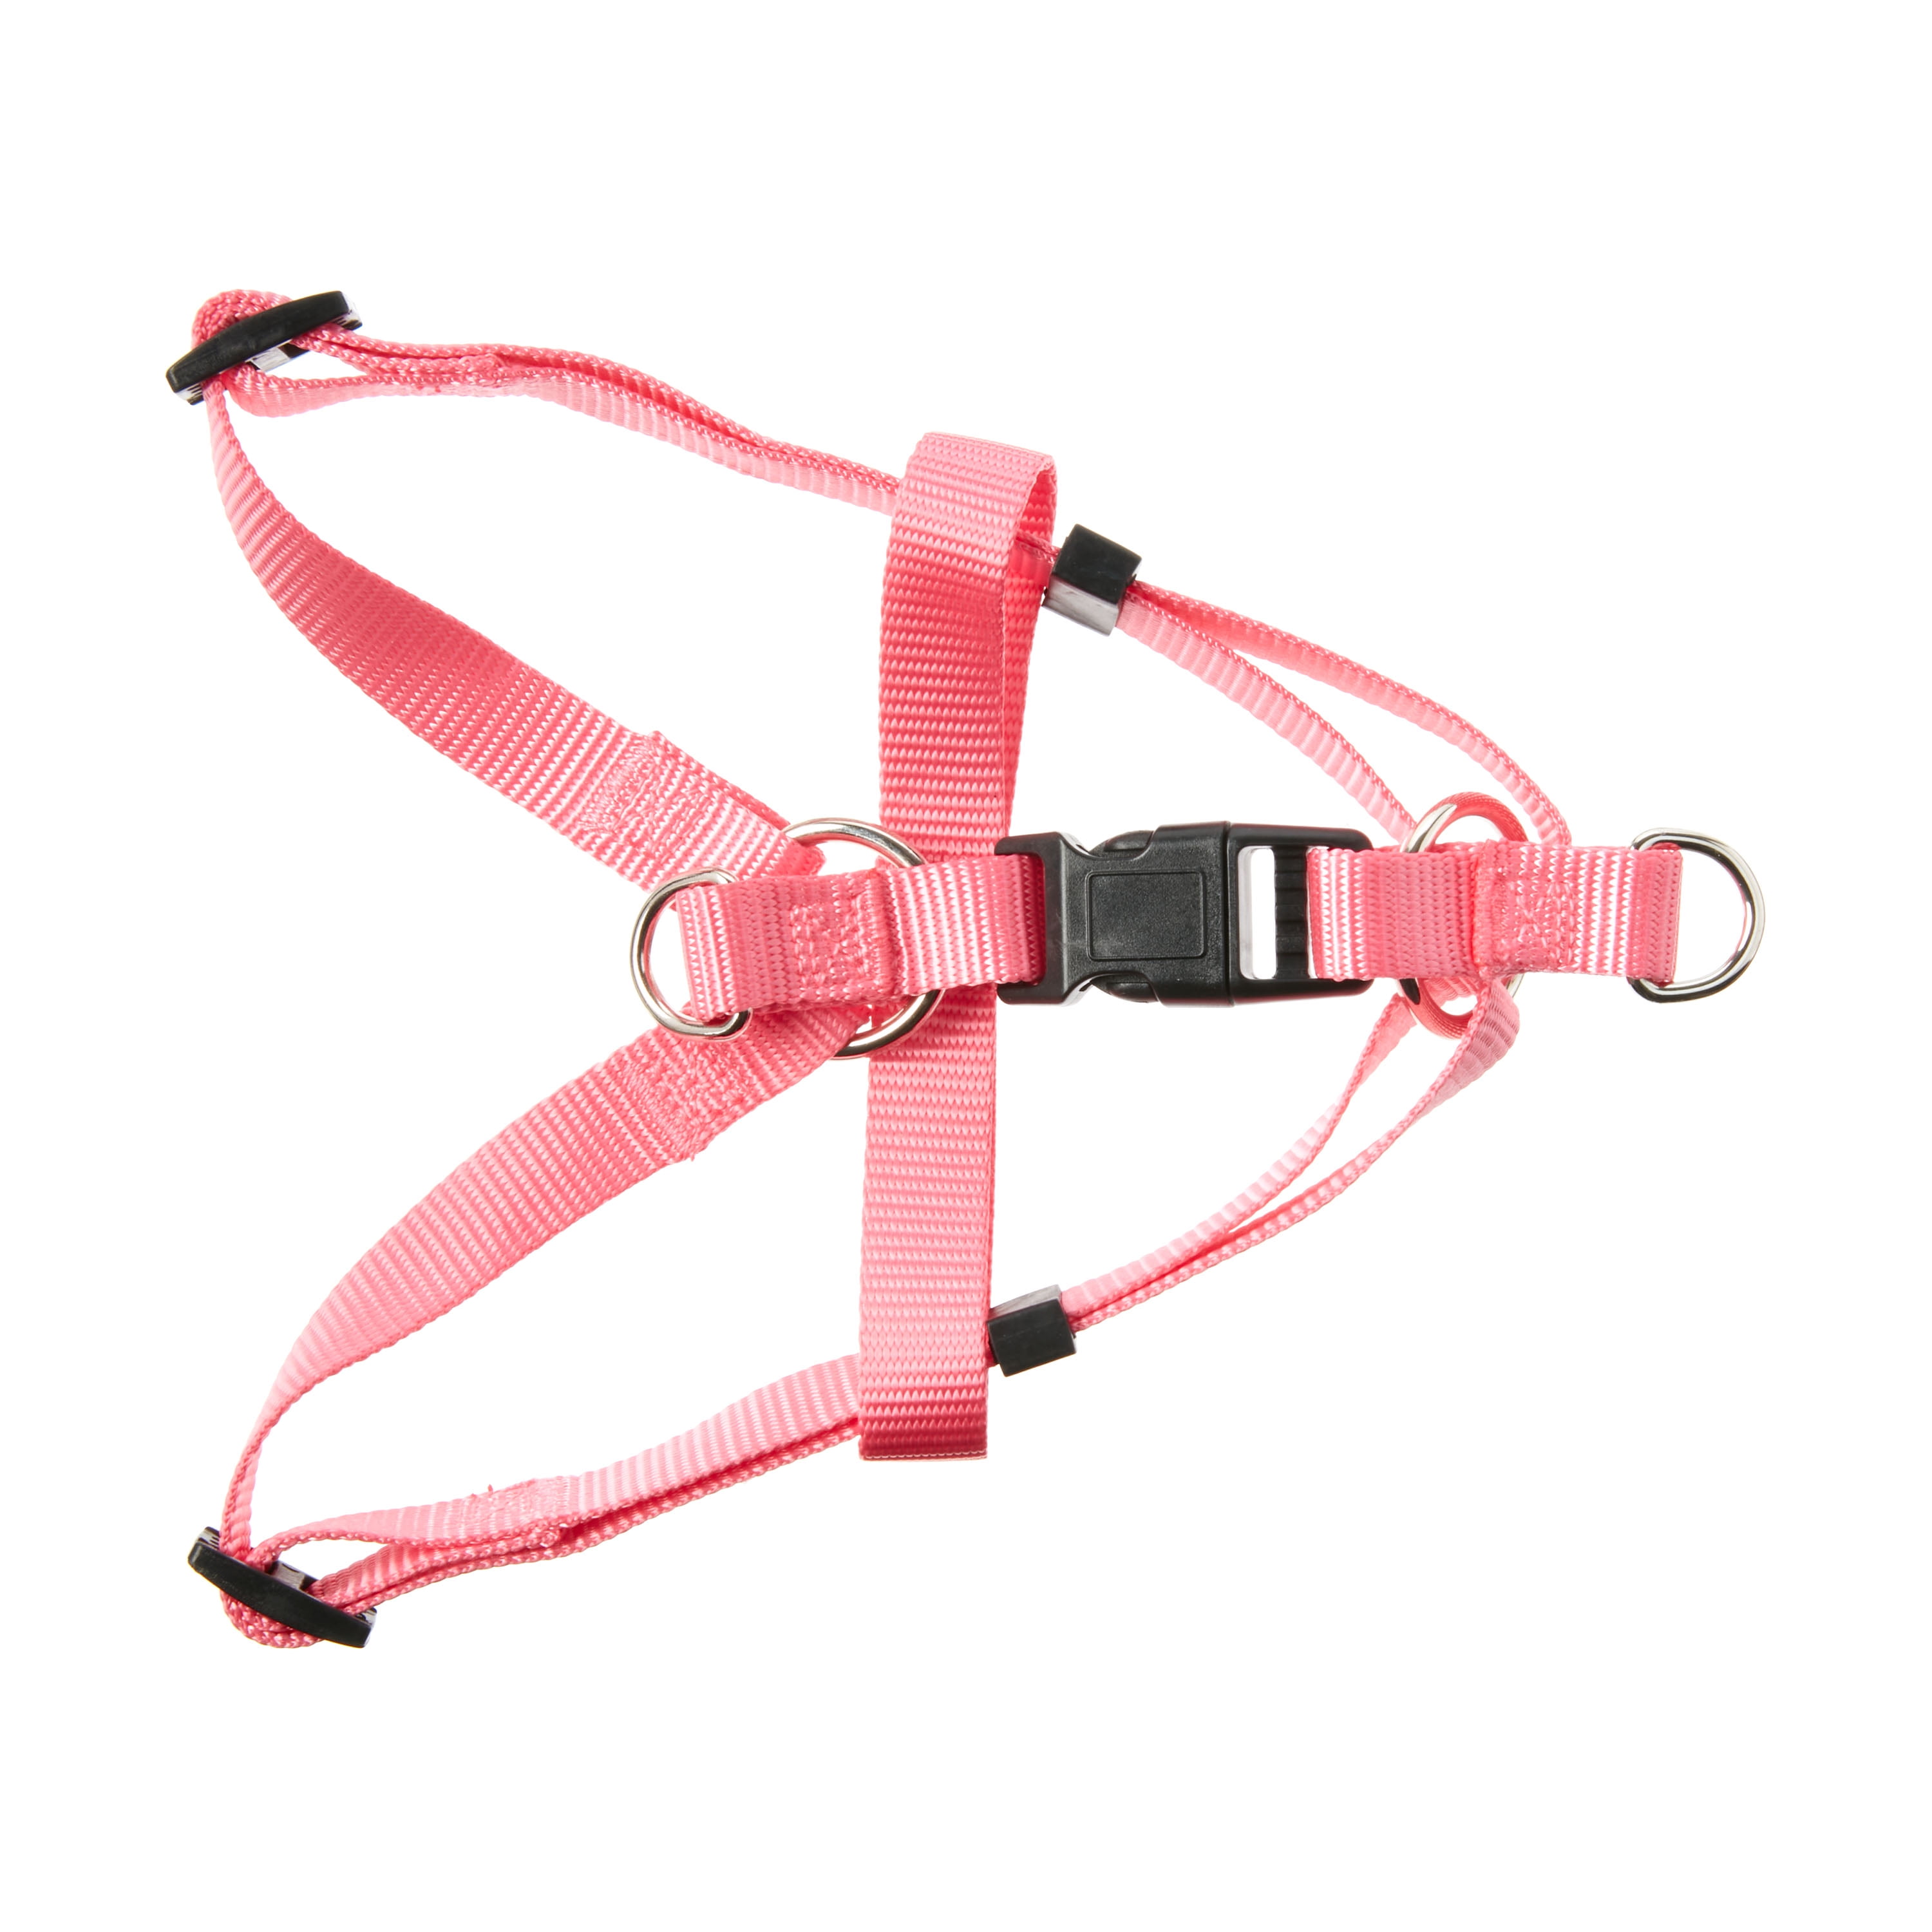 SUPER PET Nylon Comfort Harness plus Stretchy Leash for Small Animal Travel Walk 